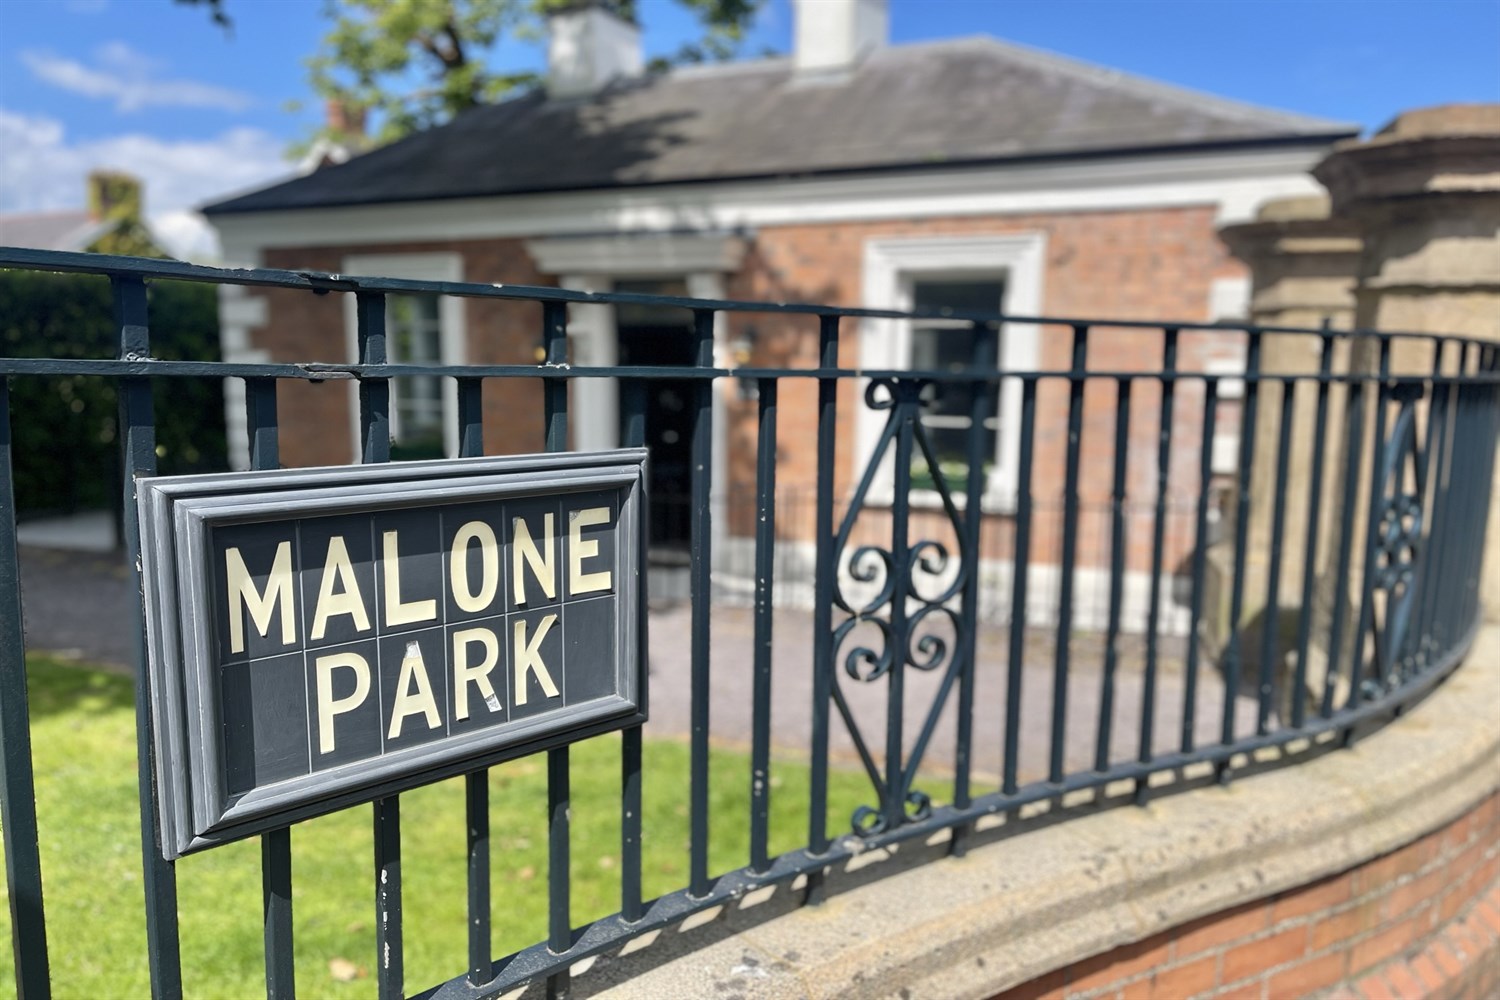 58 Malone Park, The Gate House, BT9 6JN